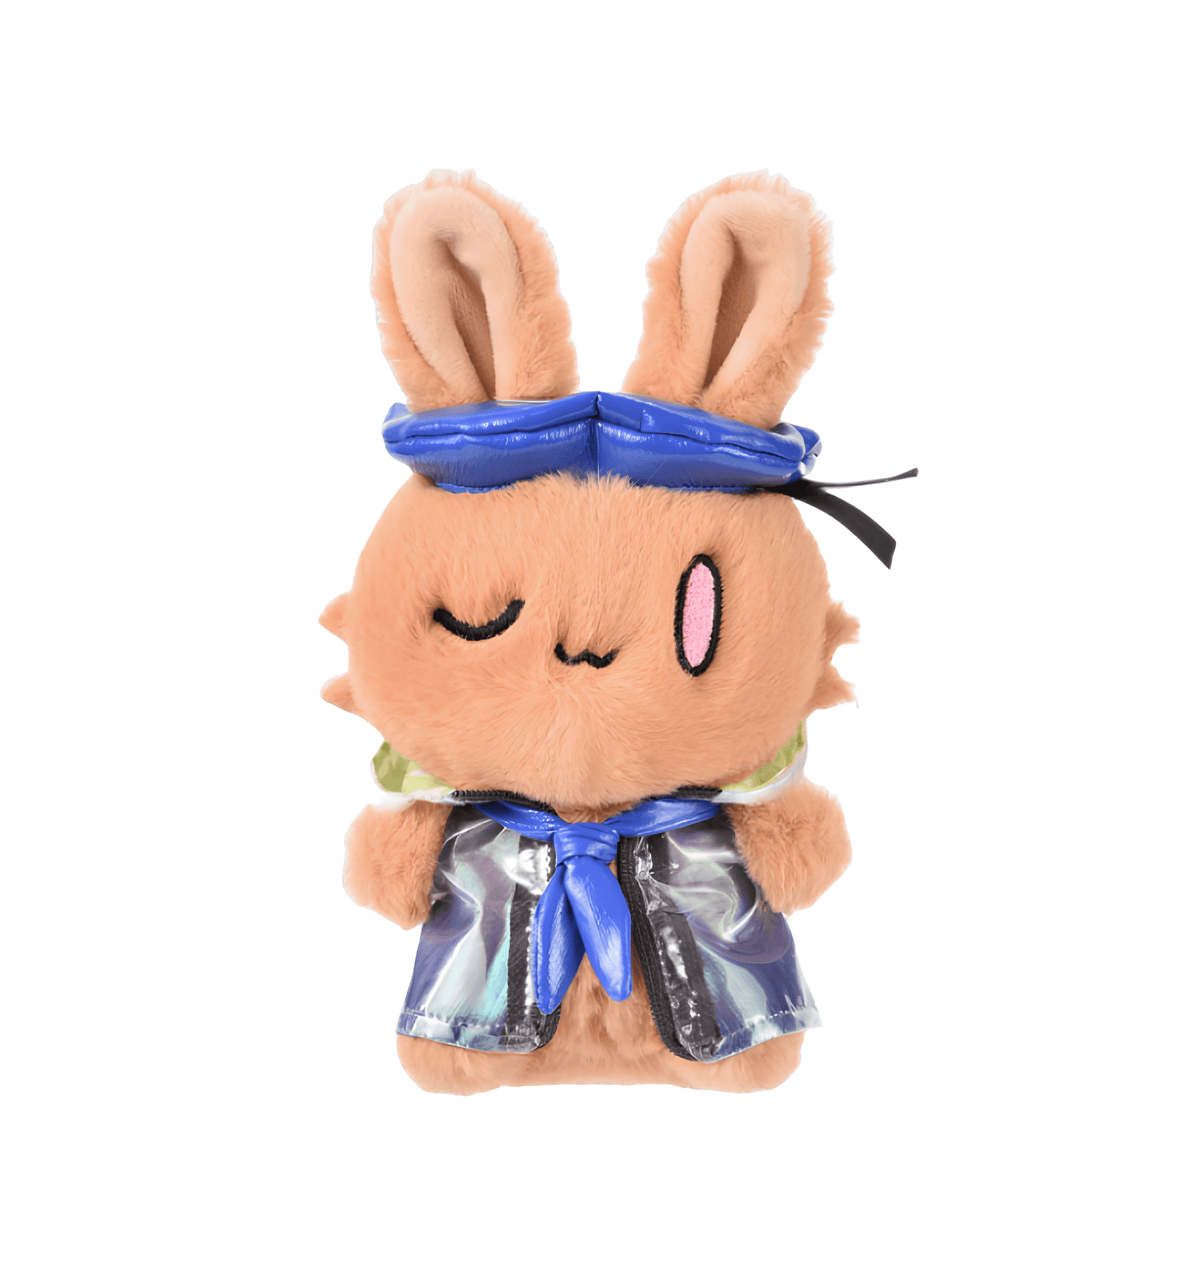 Arknights Mizuki Rabbit plush toy